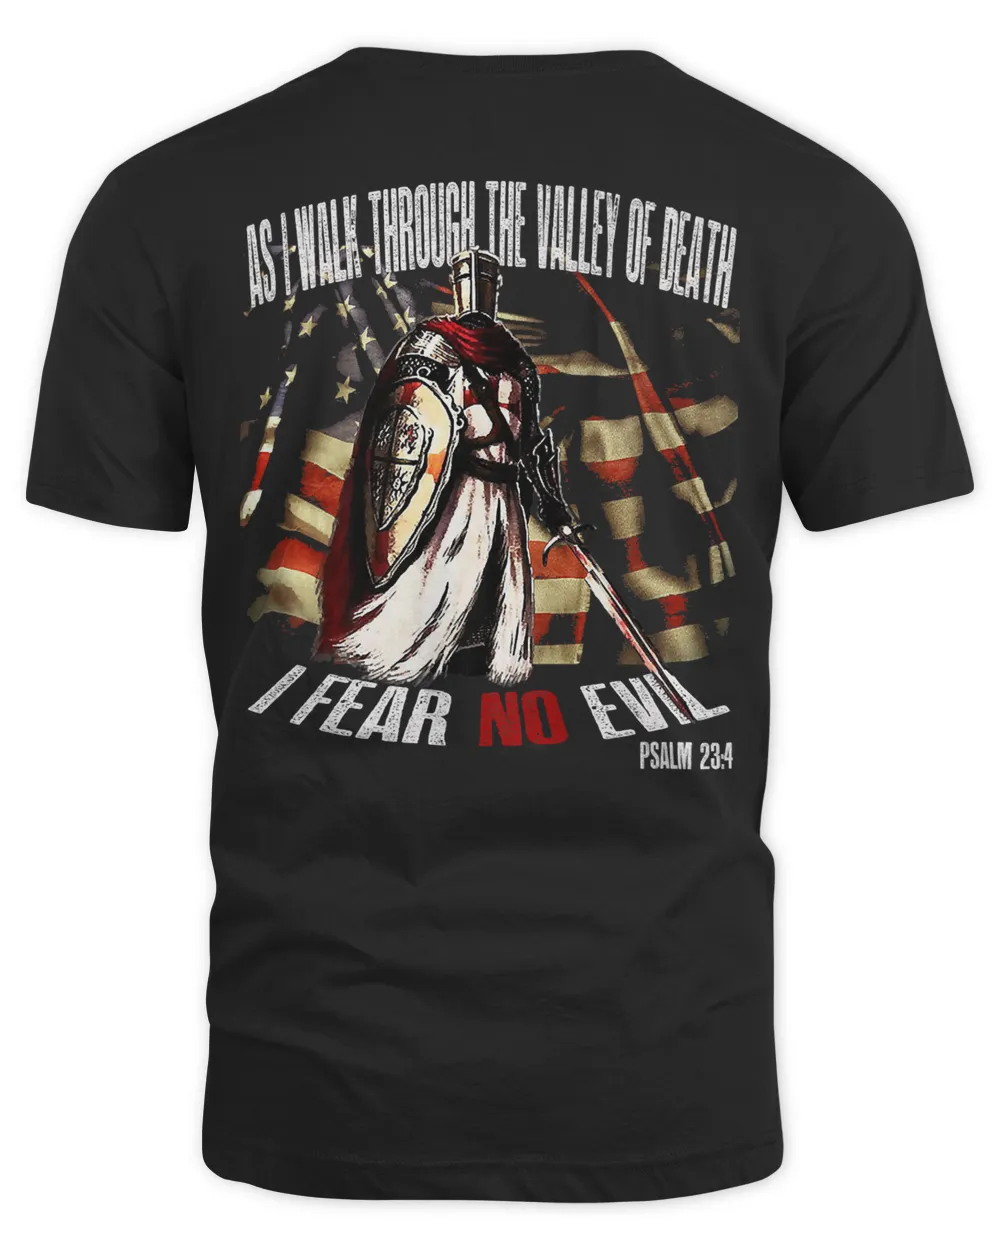 Knights Templar T Shirt - As I Walk Through The Valley Of Death I Fear No Evil